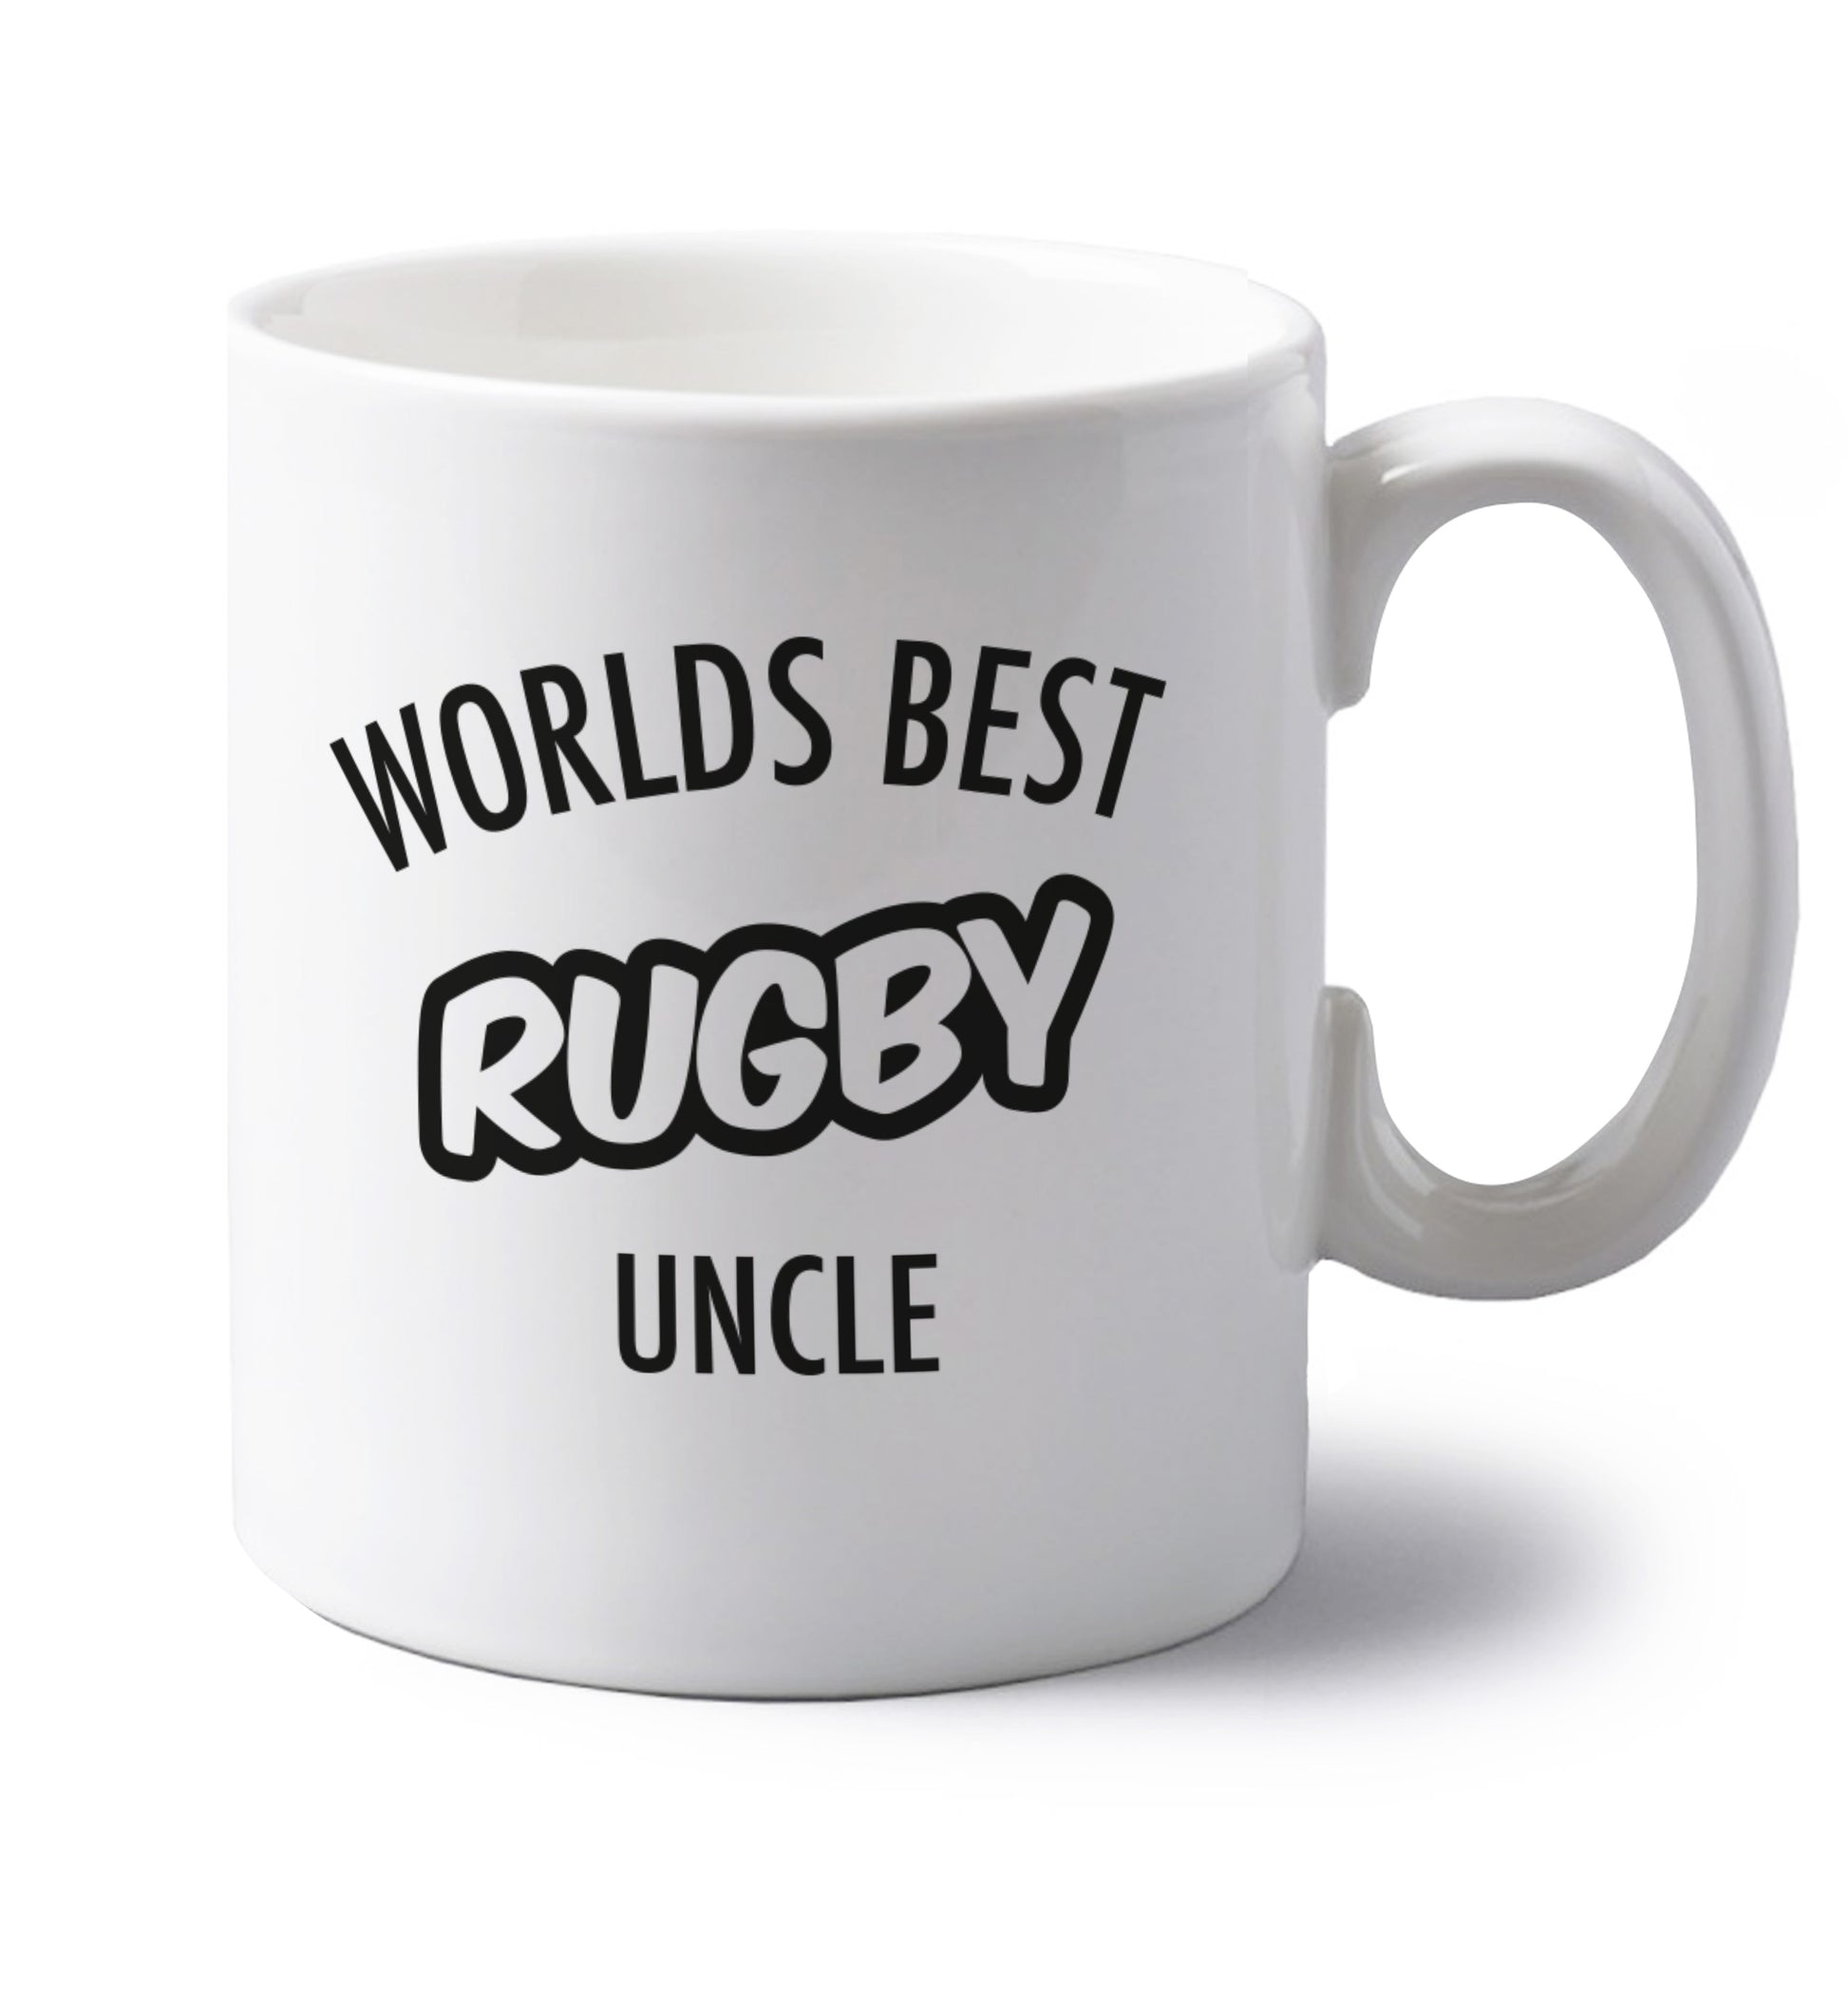 Worlds best rugby uncle left handed white ceramic mug 